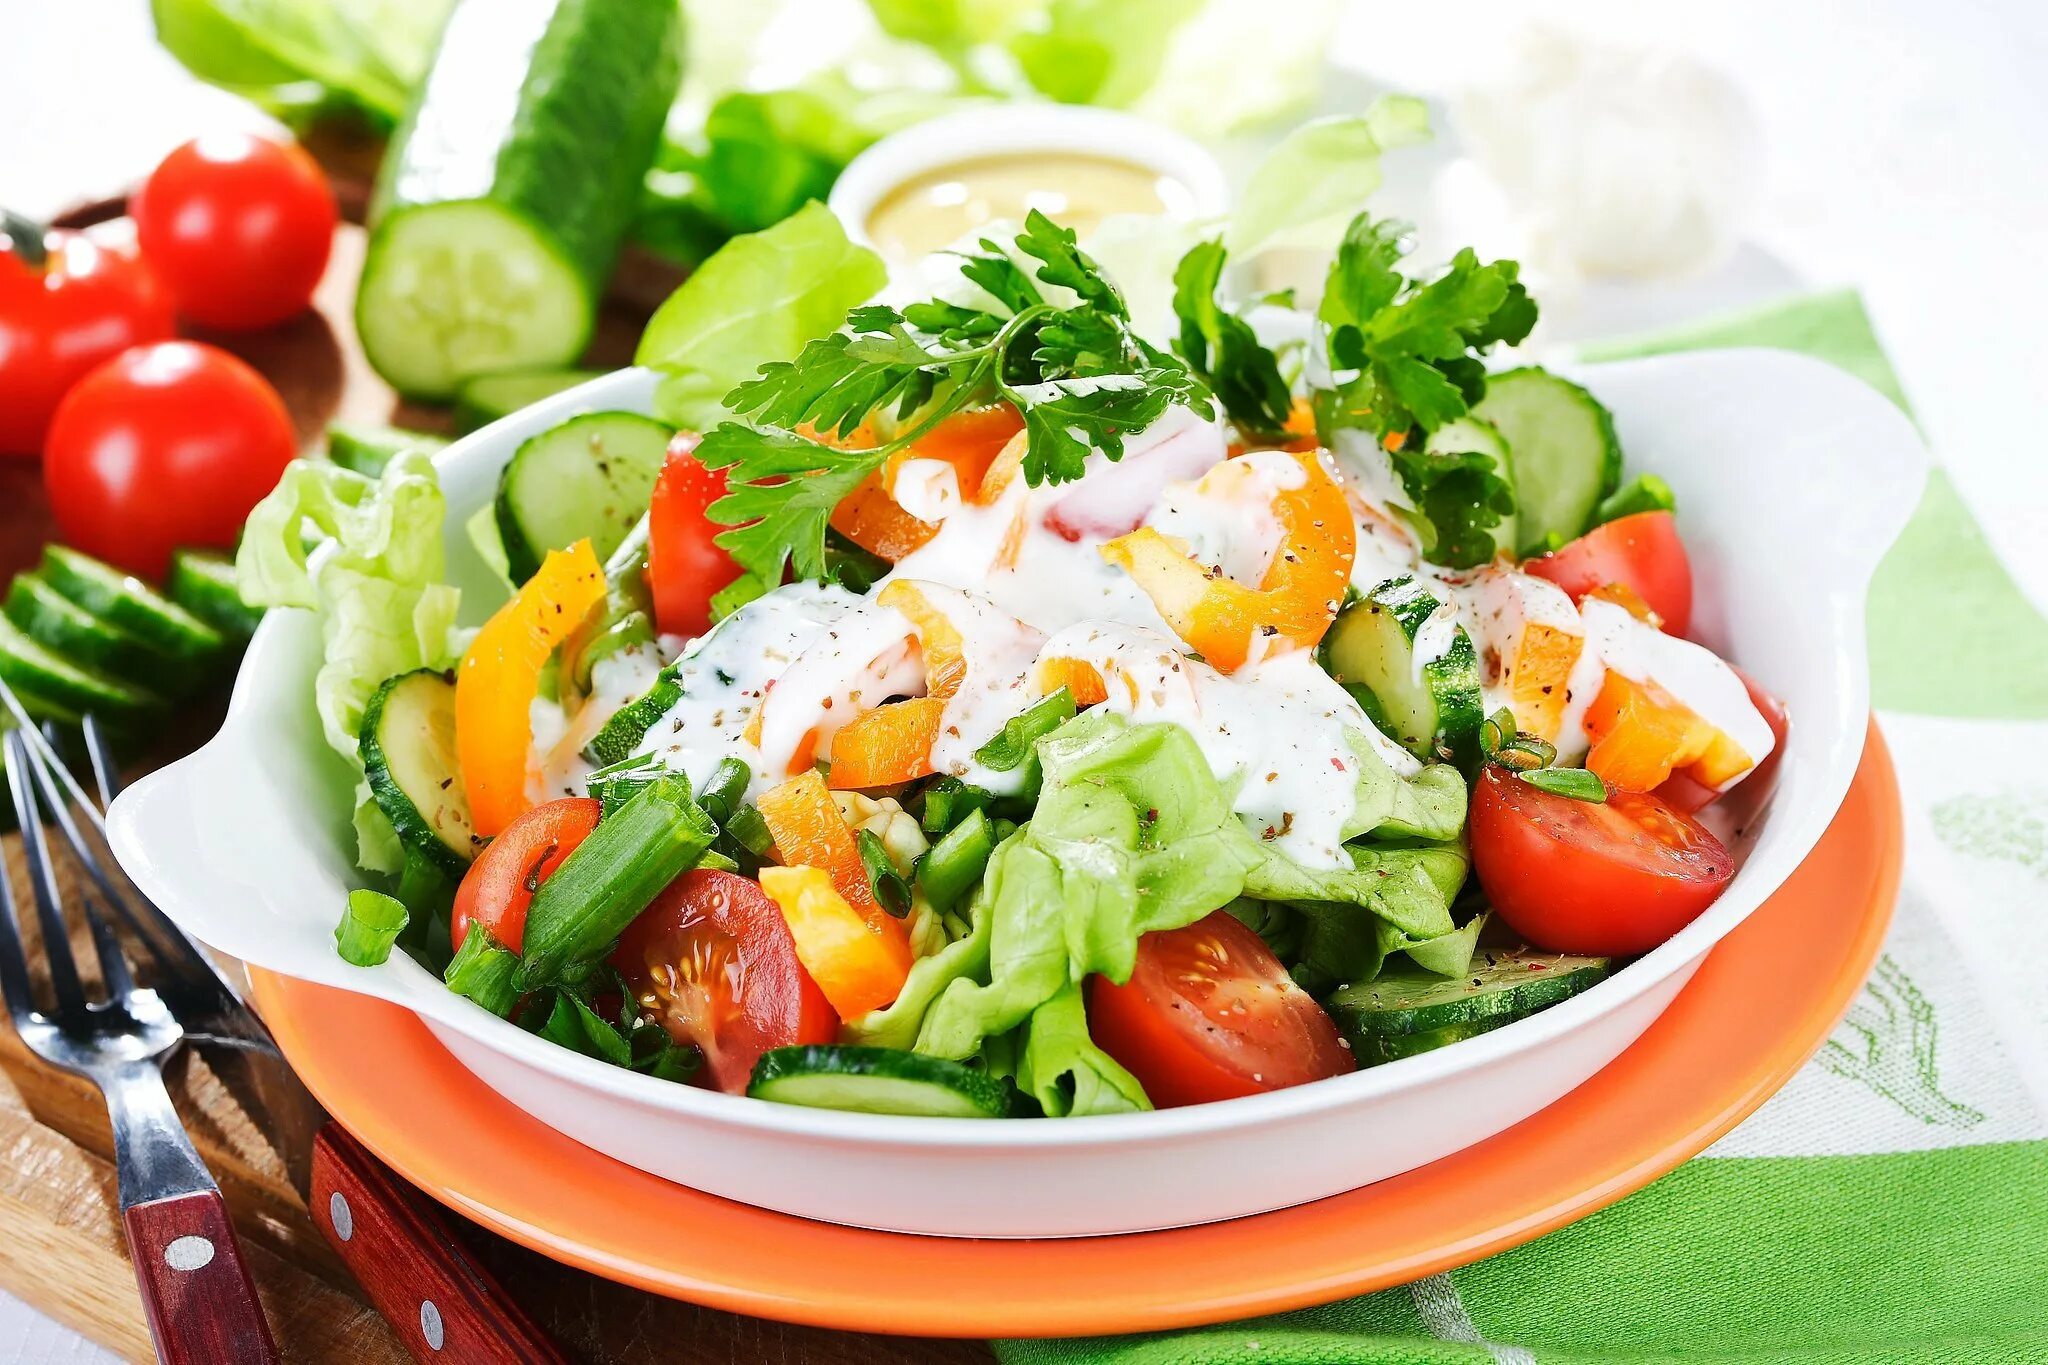 Салат. Салат со свежими овощами. Салат овощ. Фруктово овощной салат. Можно ли есть овощной салат